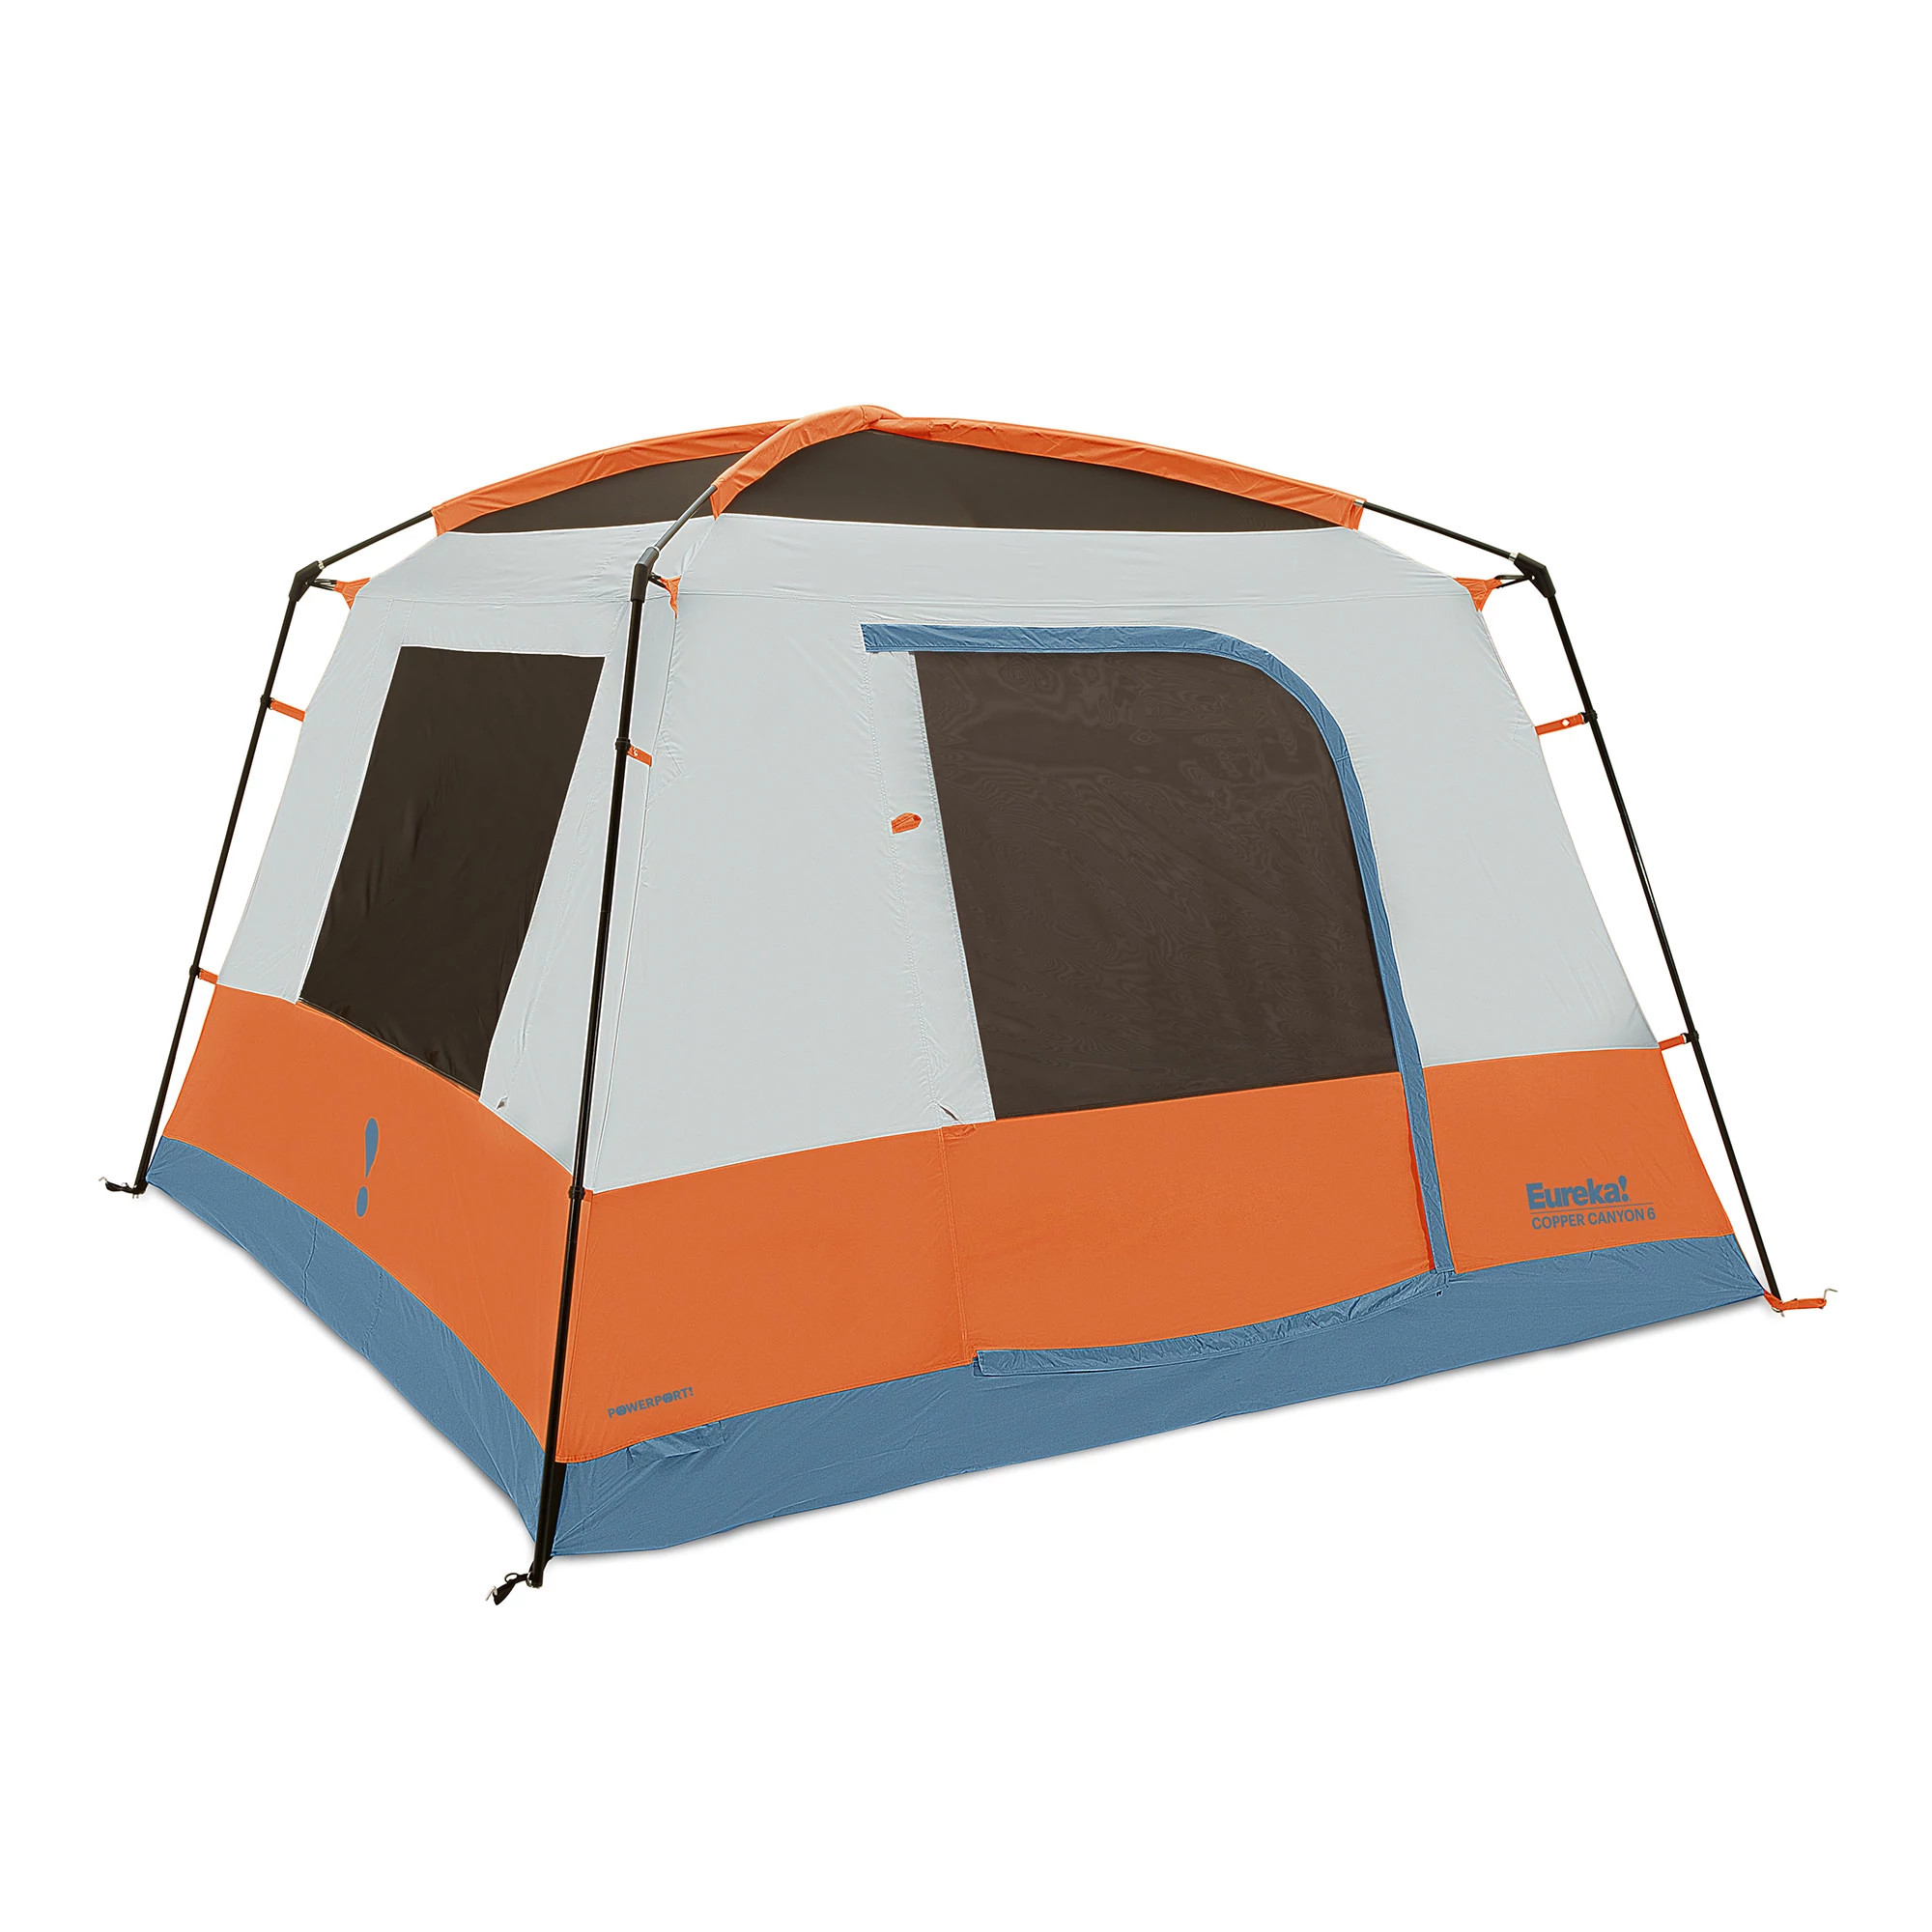 Copper Canyon LX 6 Person Tent -